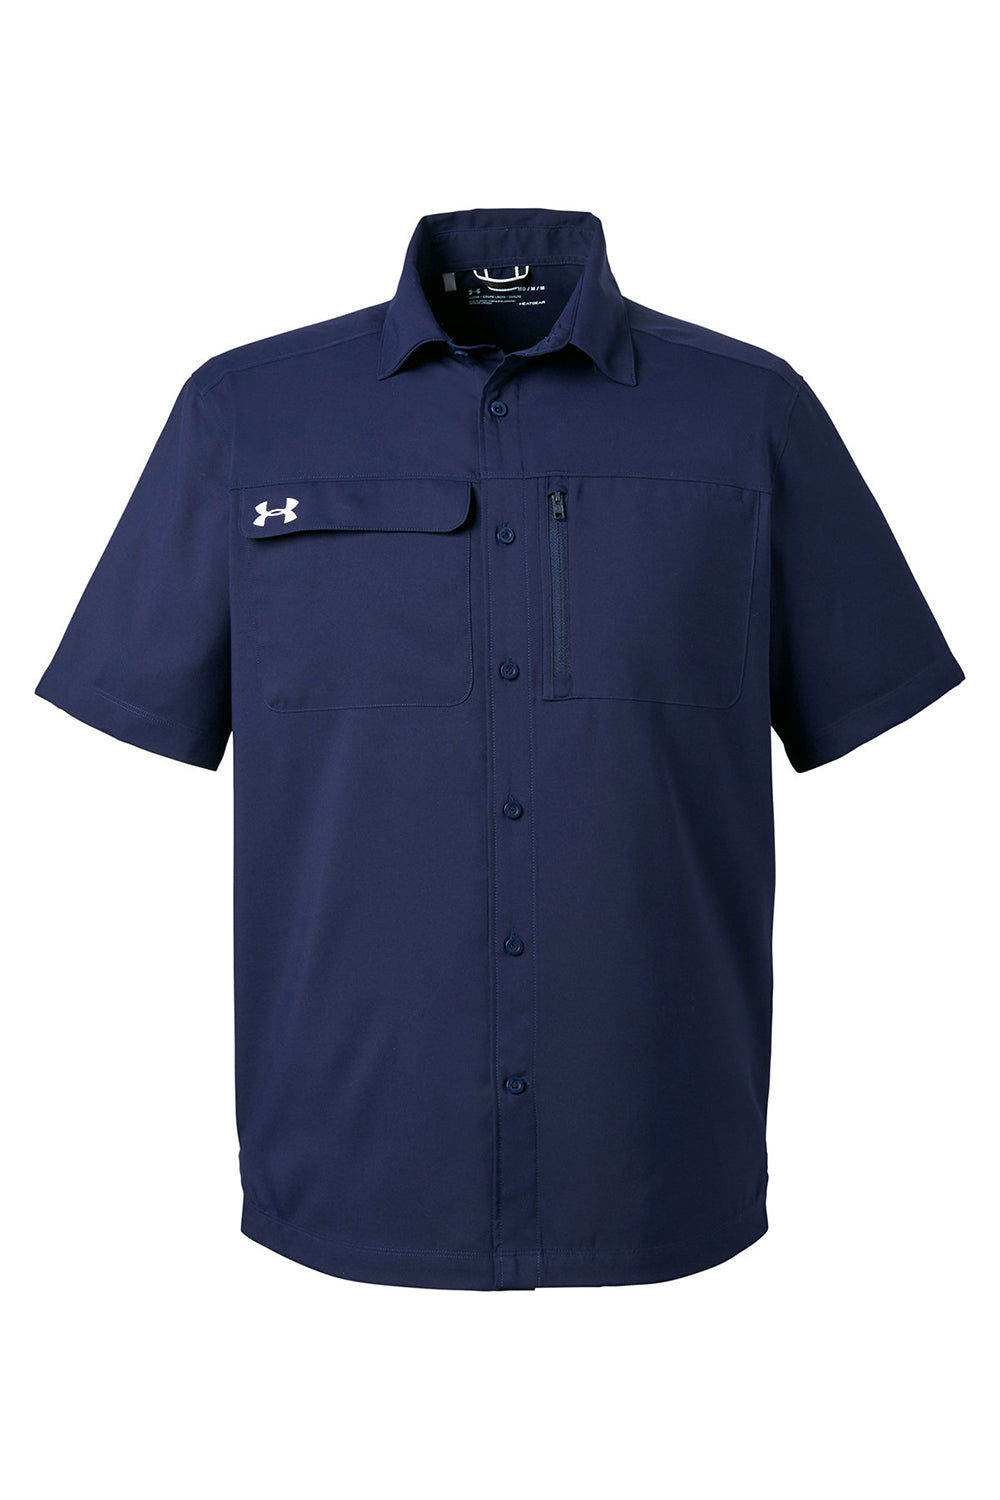 Under Armour 1351360 Mens Motivate Moisture Wicking Short Sleeve Button Down Shirt w/ Pocket Midnight Navy Blue Flat Front